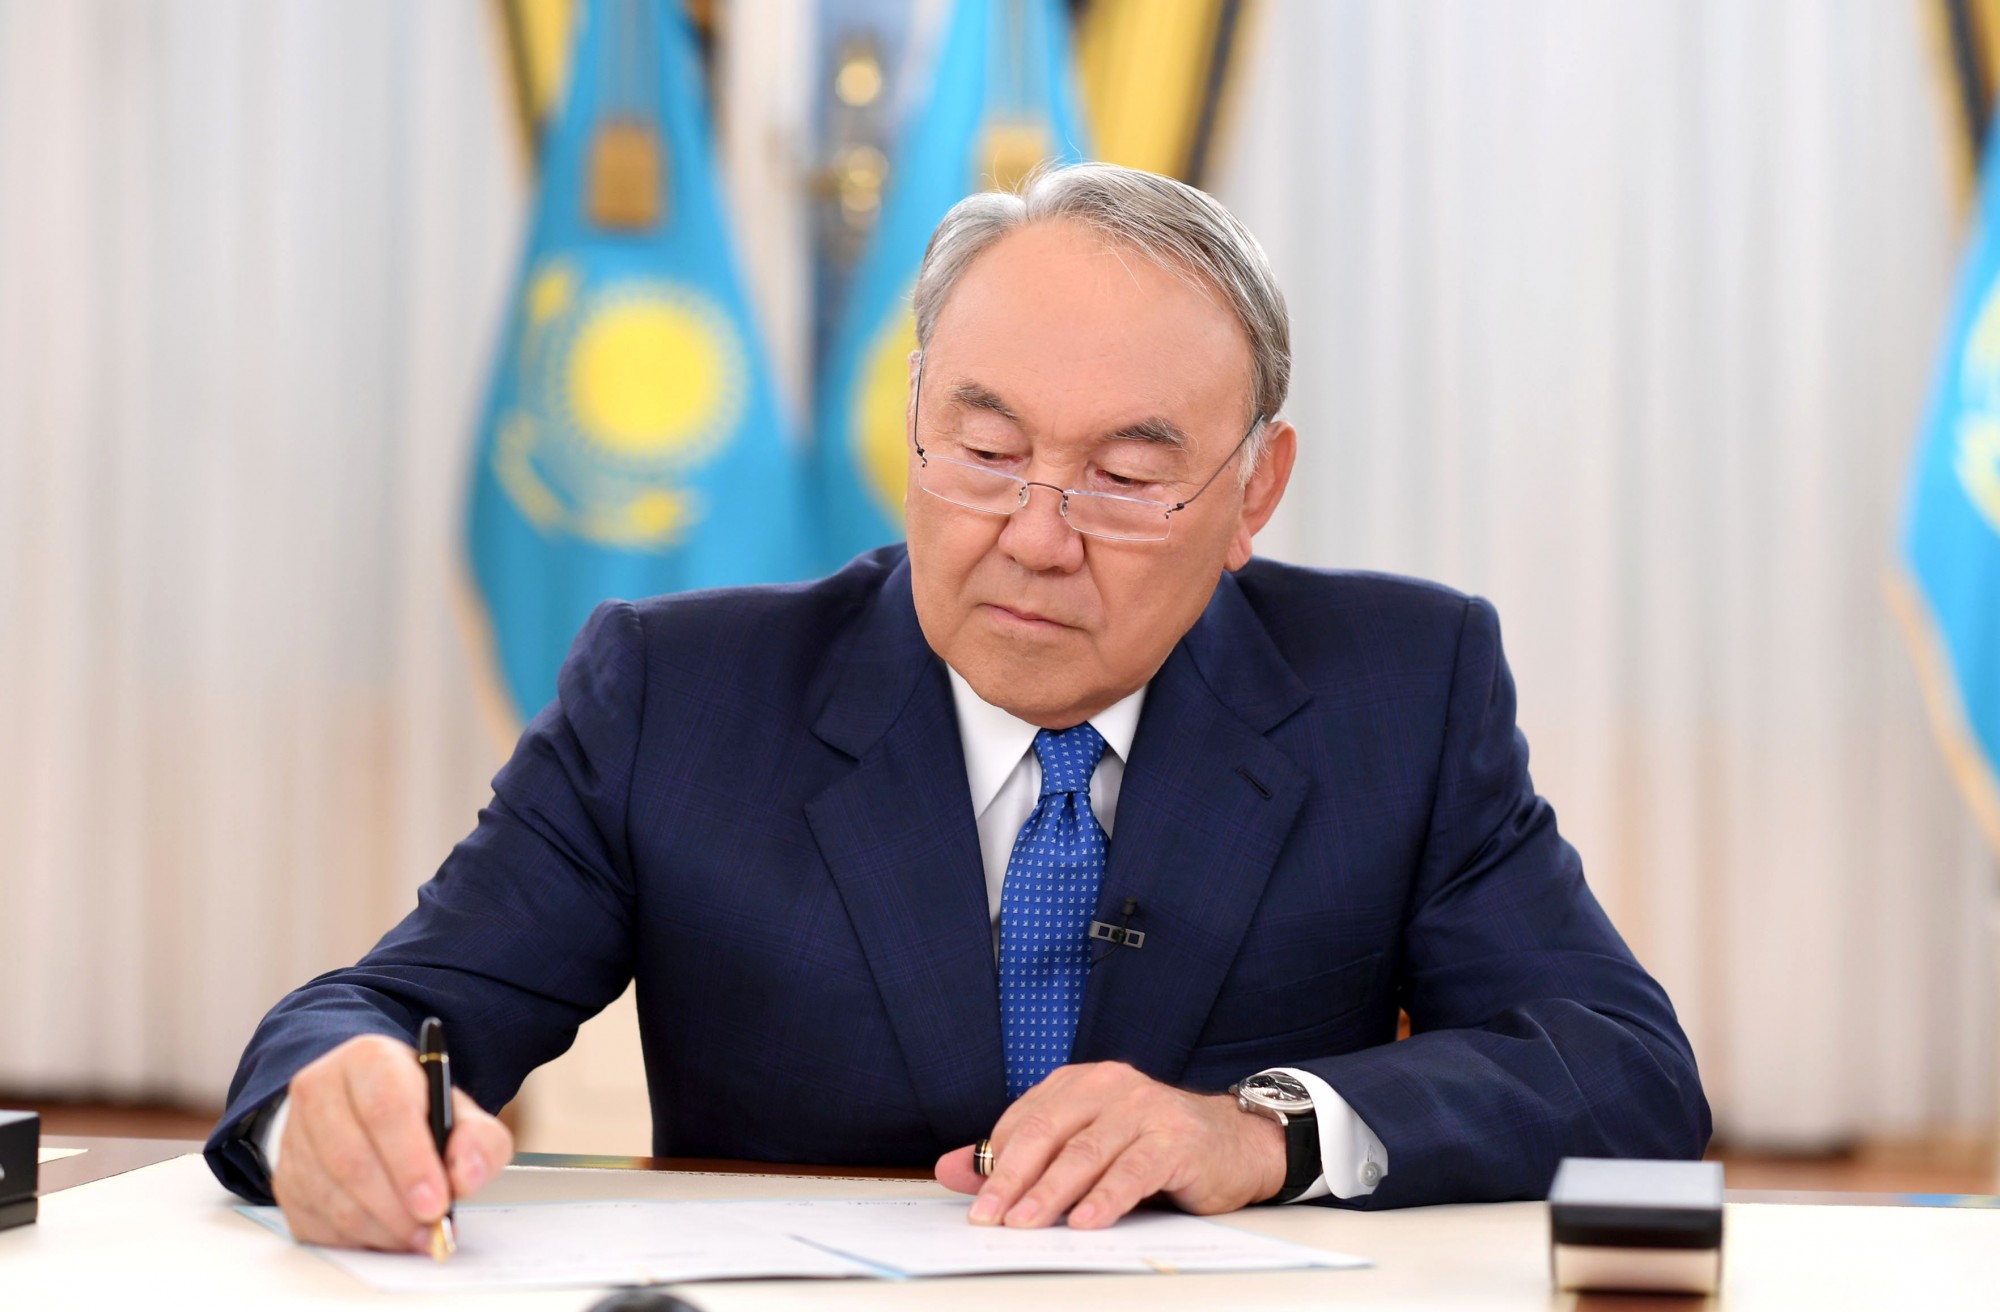 Глава государства публично подписал Закон, благоприятствующий развитию бизнеса